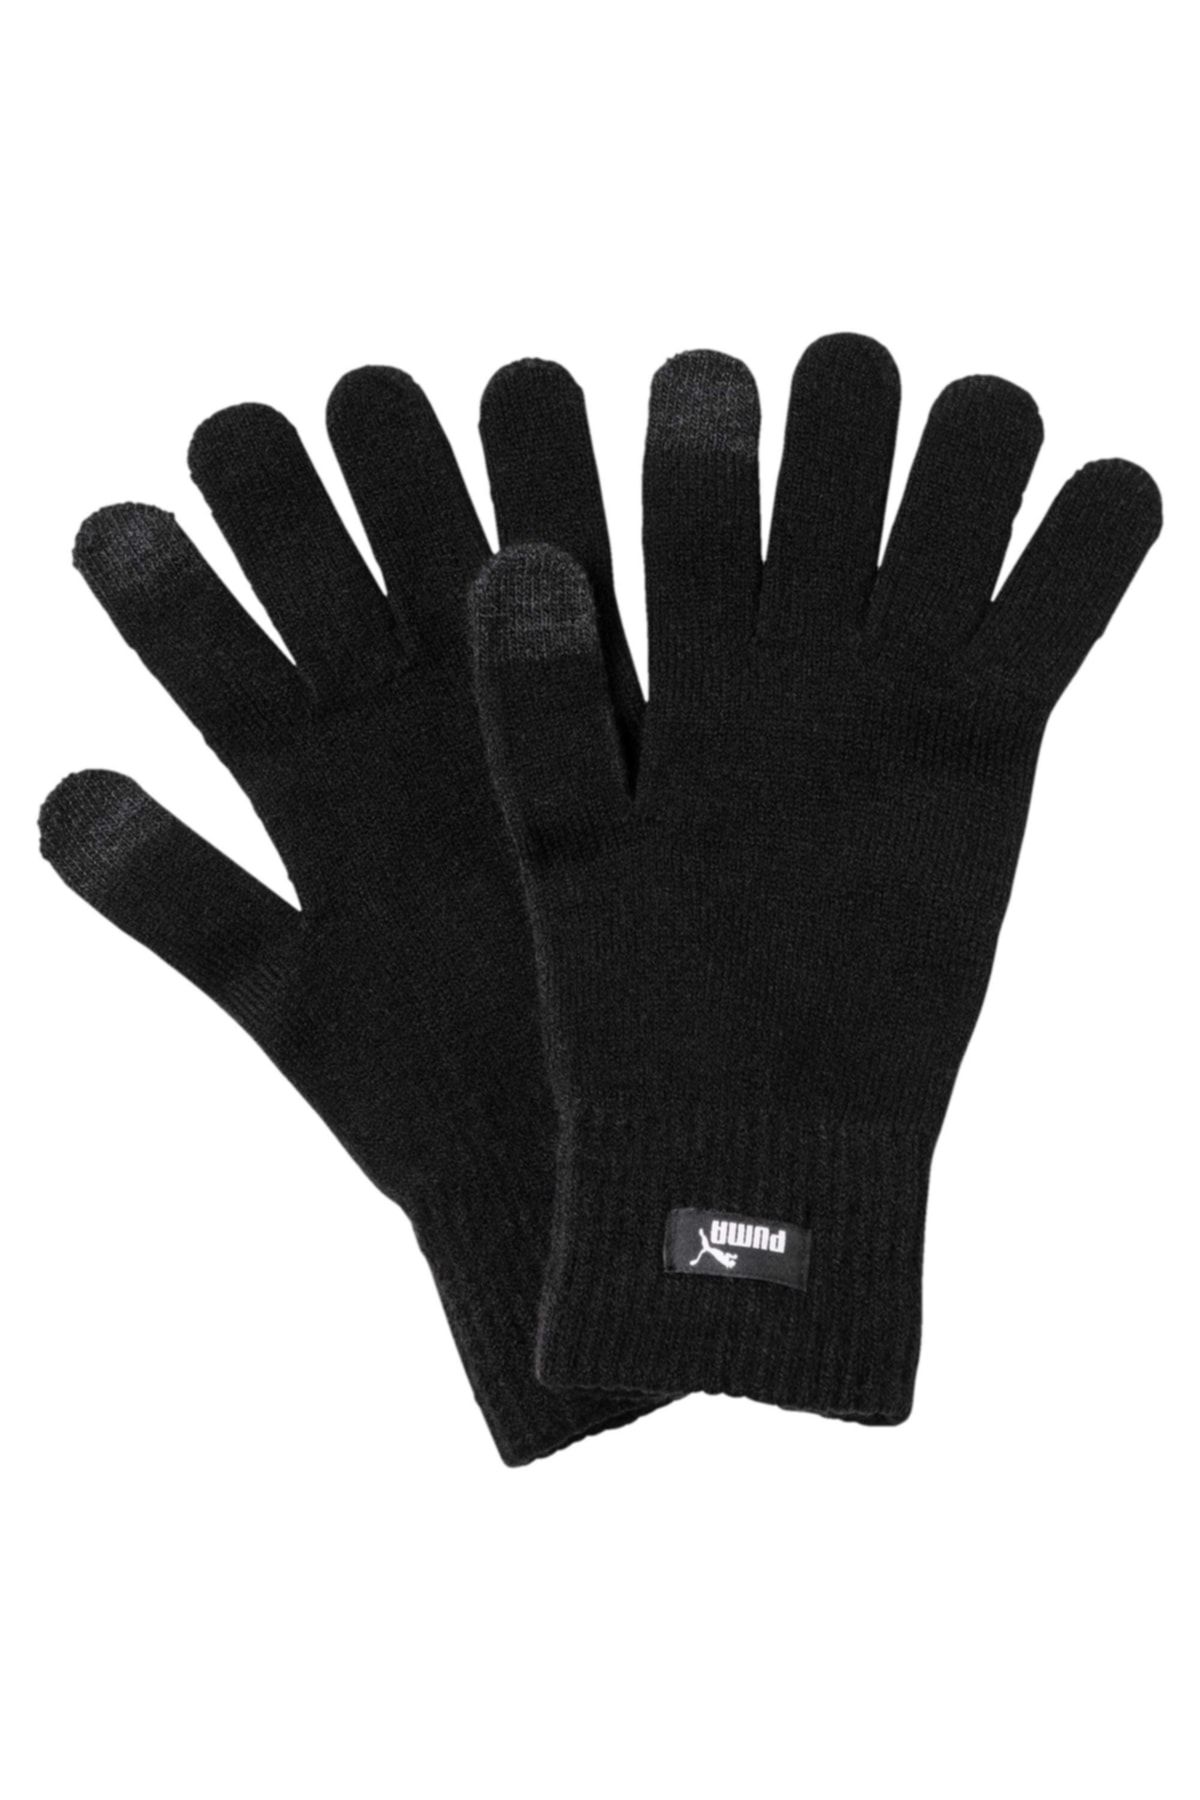 Puma Unisex Eldiven - 4131604 Knit Gloves - 4131604